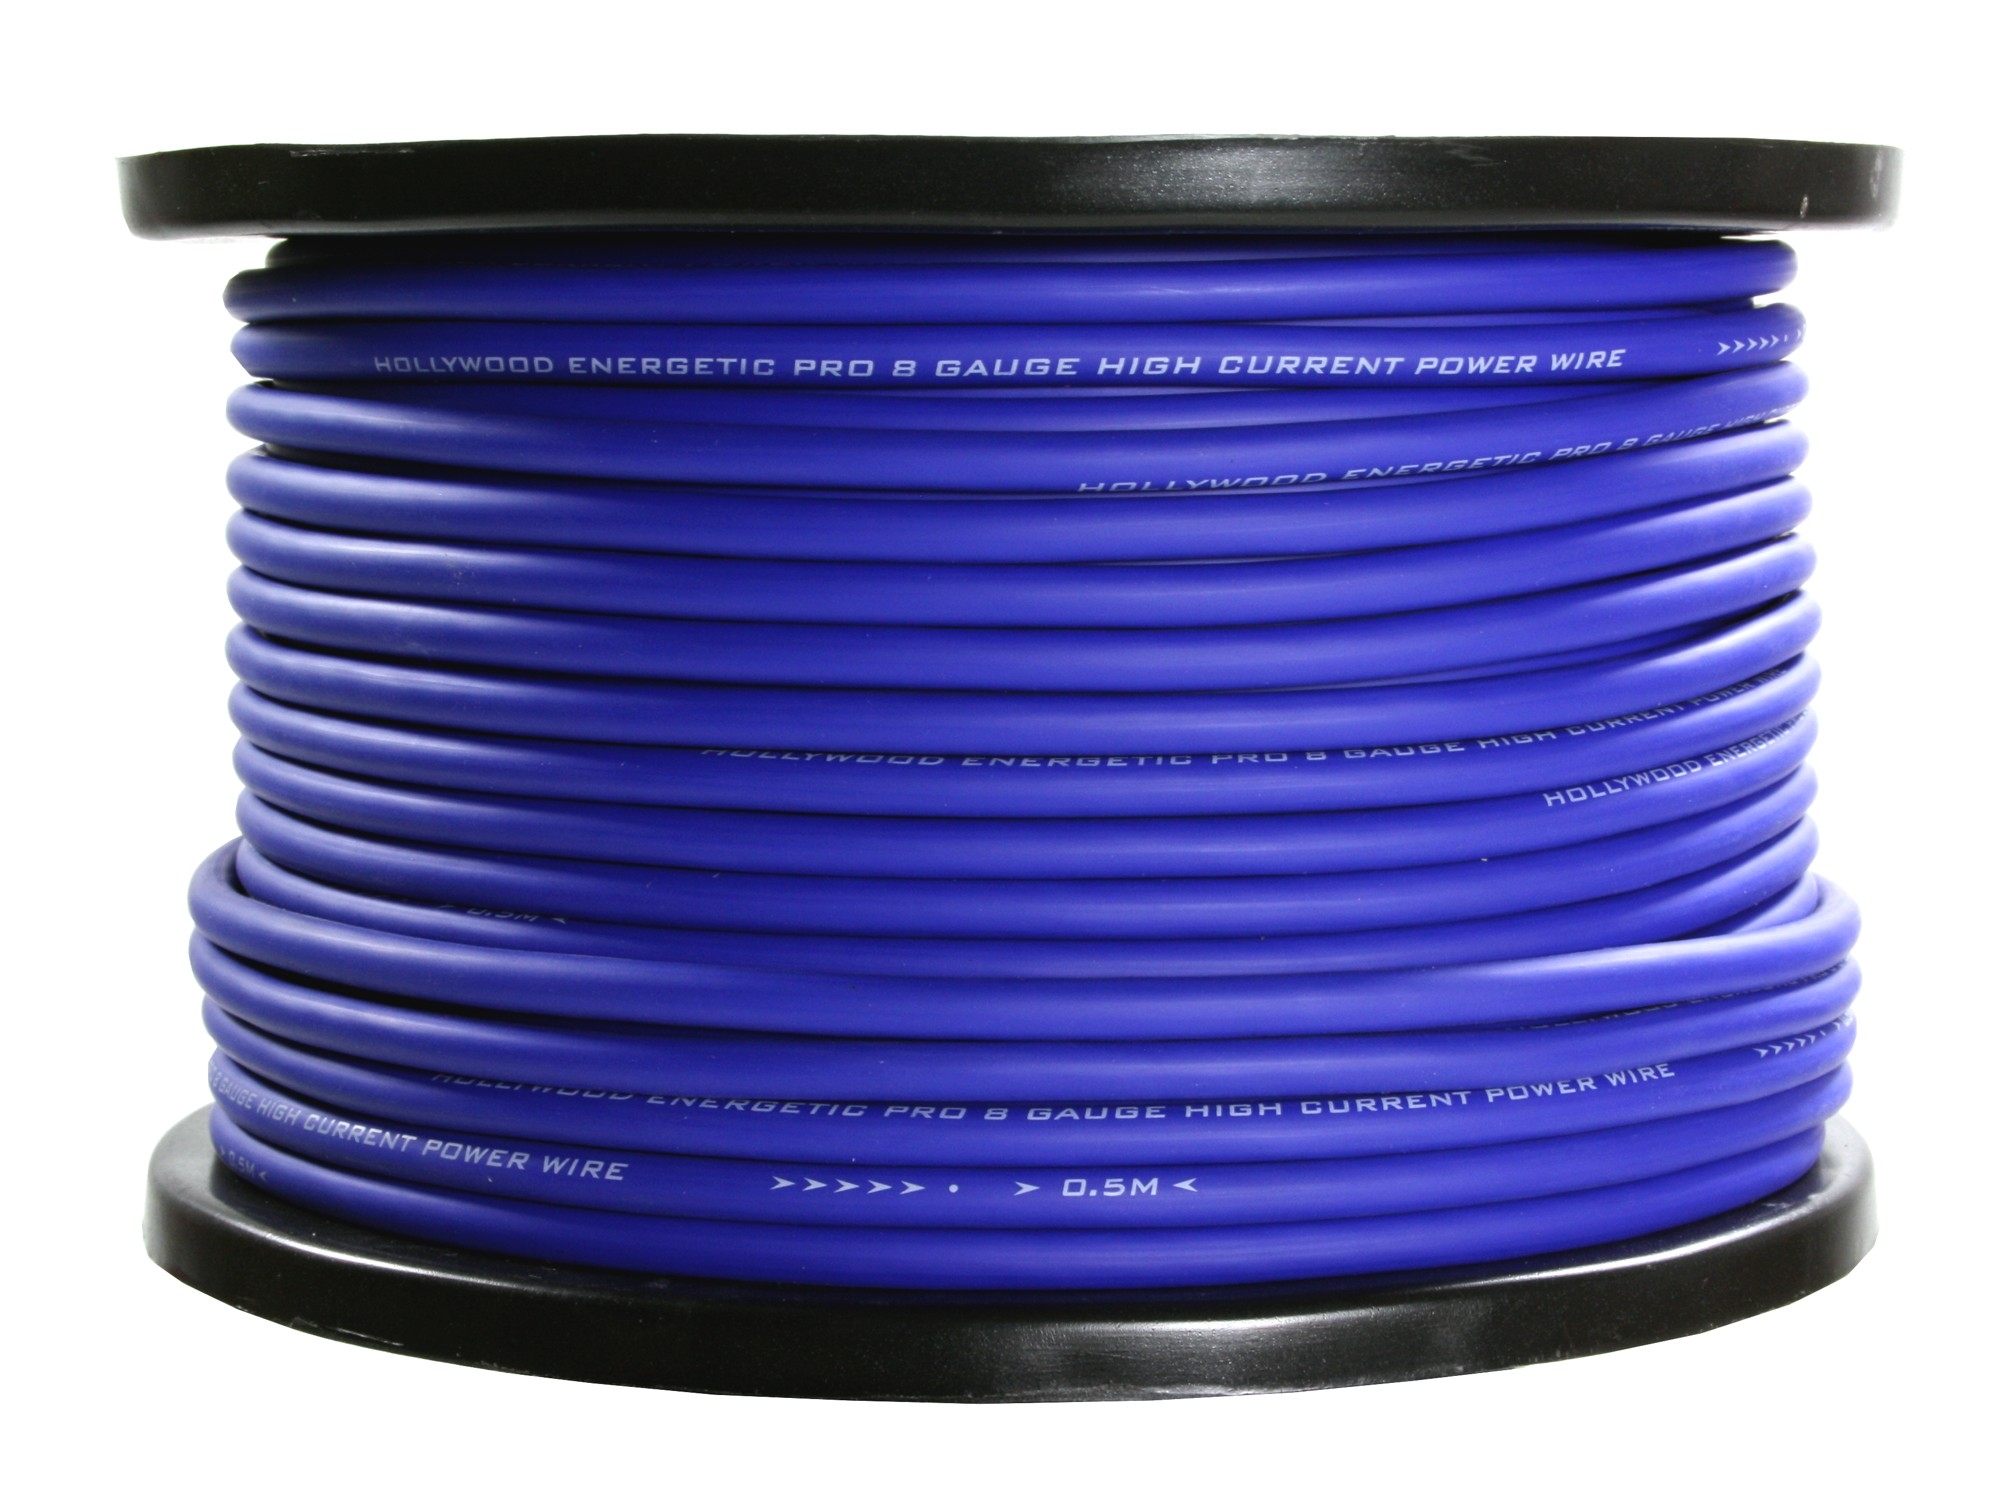 10mm2 power kabel blauw